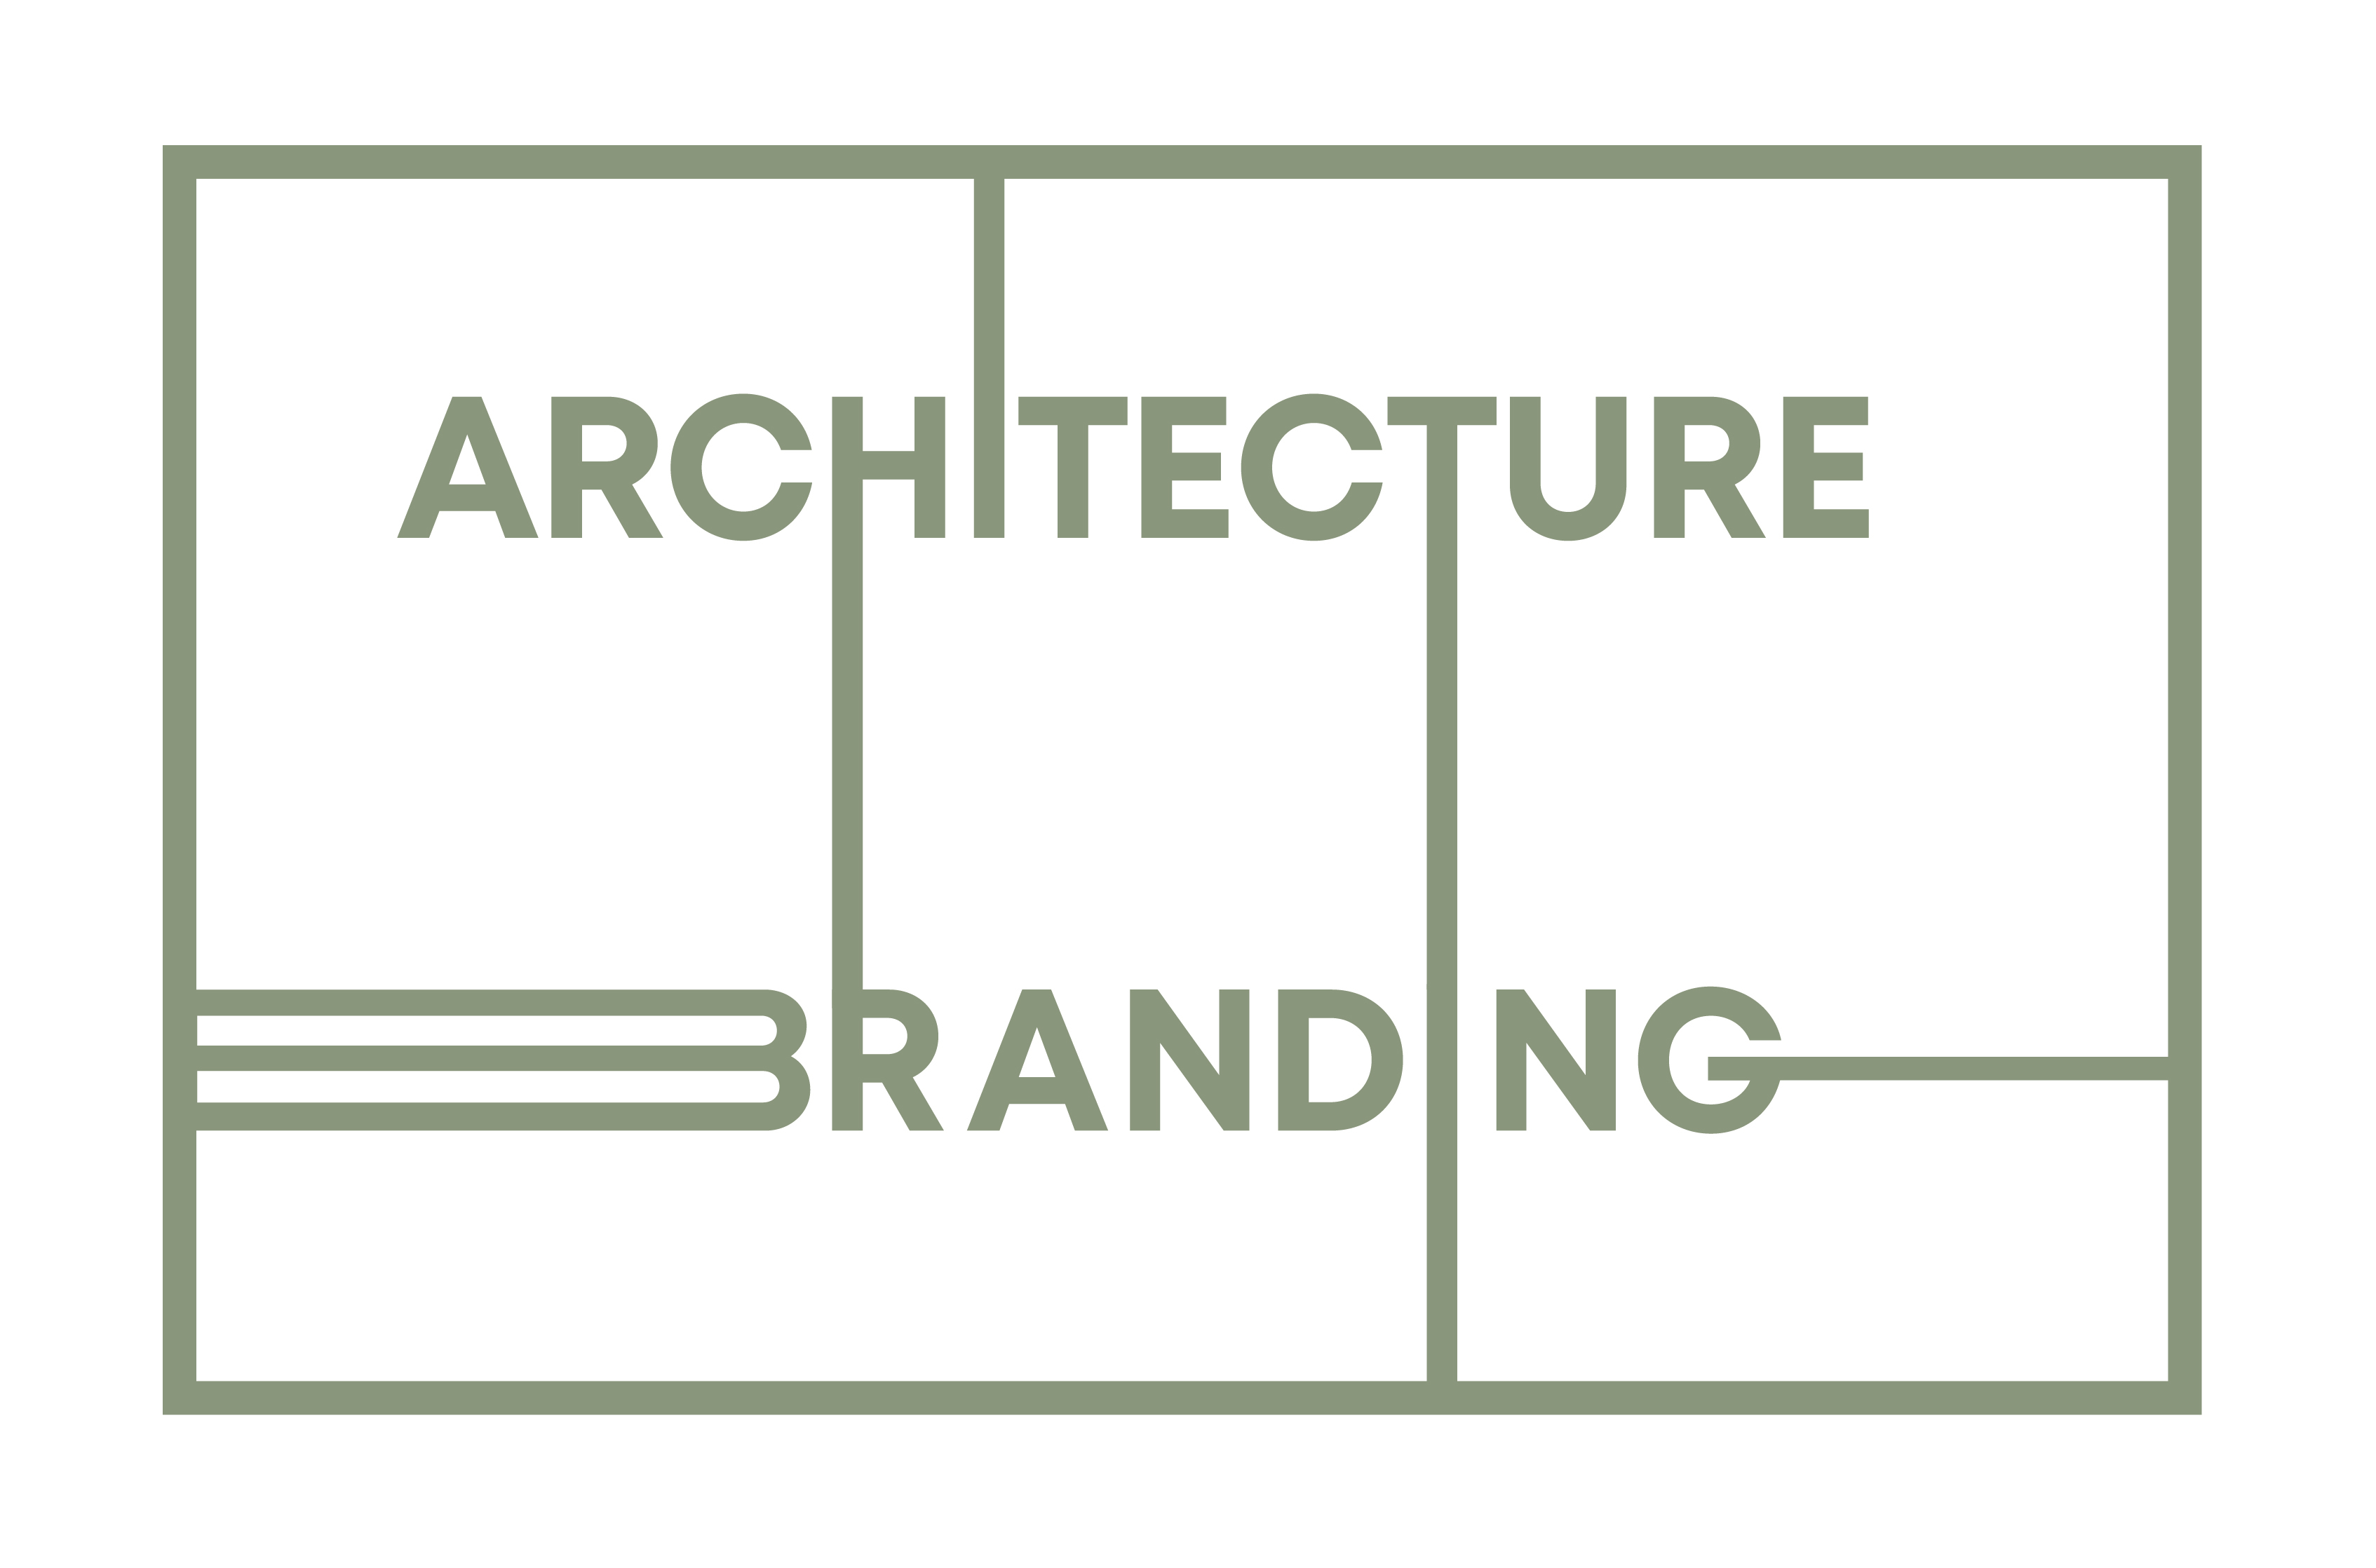 Architecture & Branding: Speaking a common language